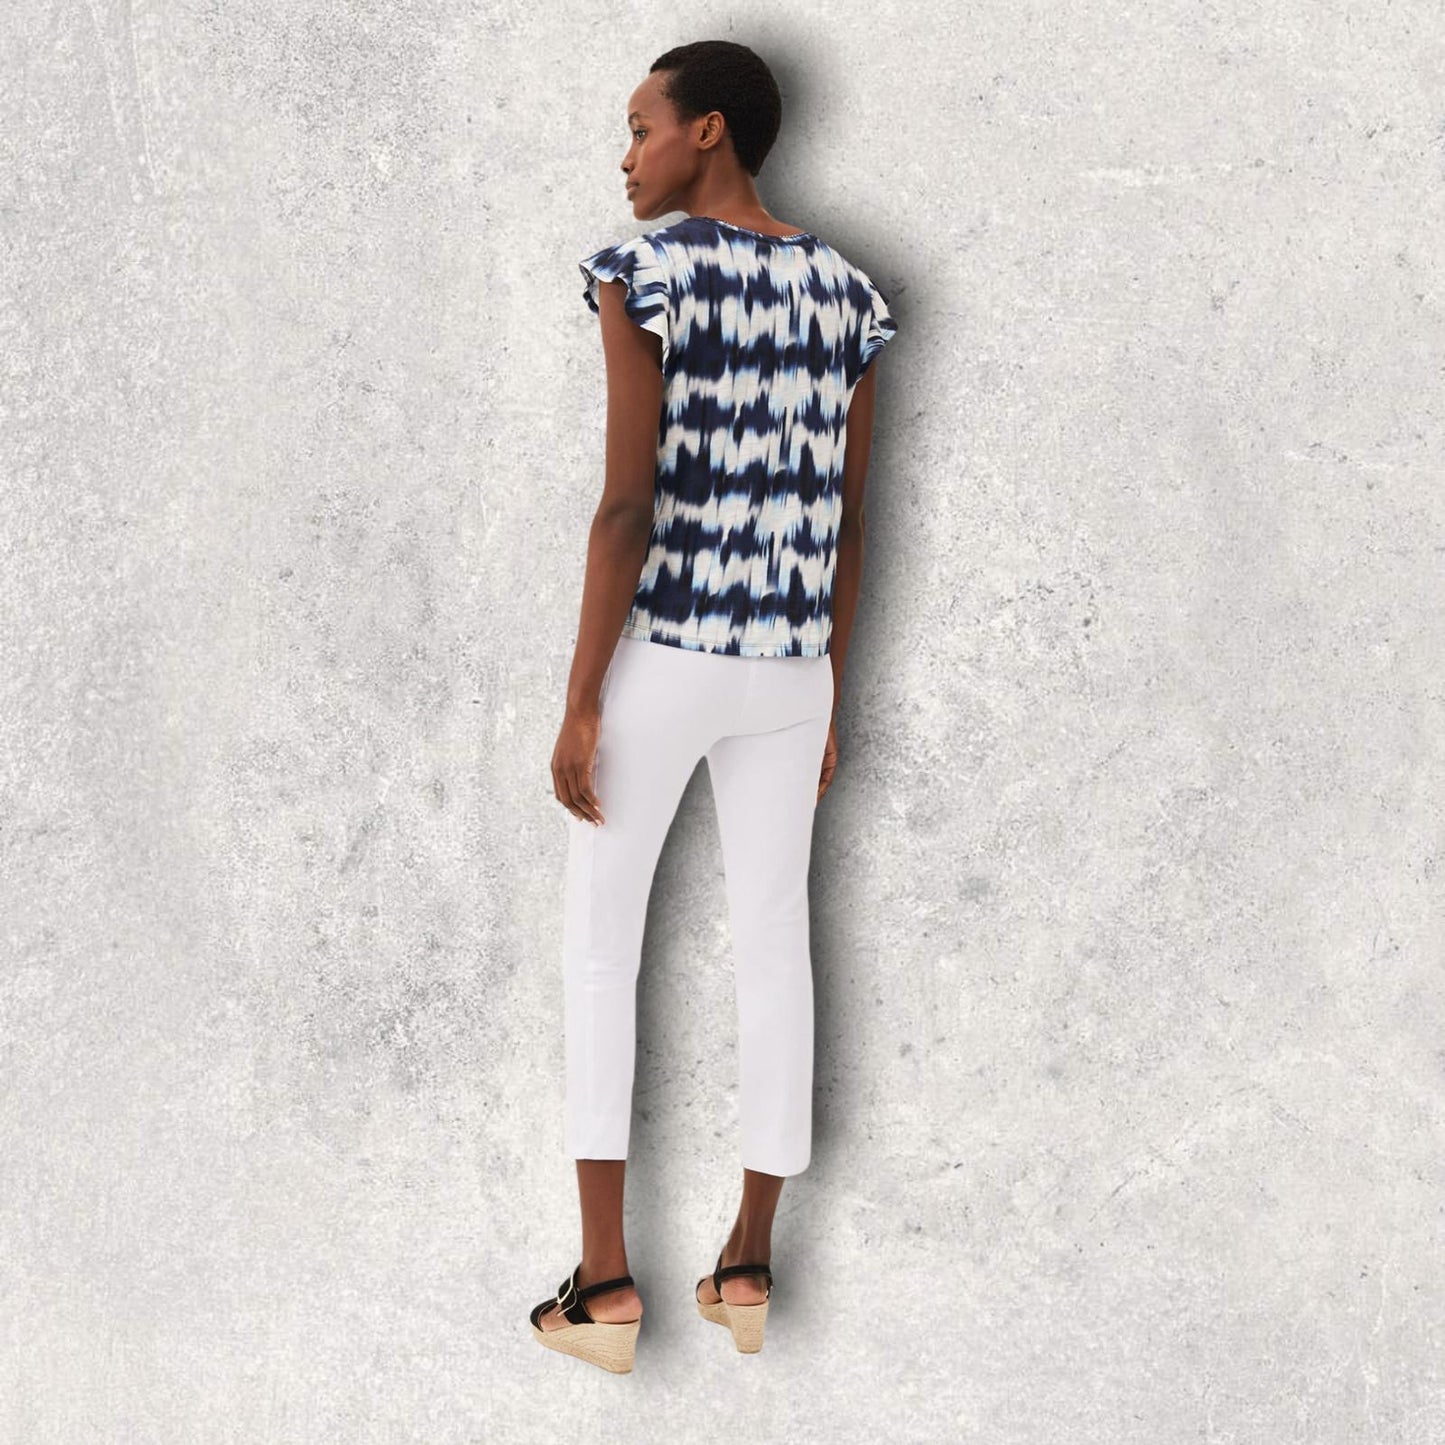 Libra White Cotton Summer Cropped Trousers UK 10 US 6 EU 38 RRP £89.95 BNWT Timeless Fashions